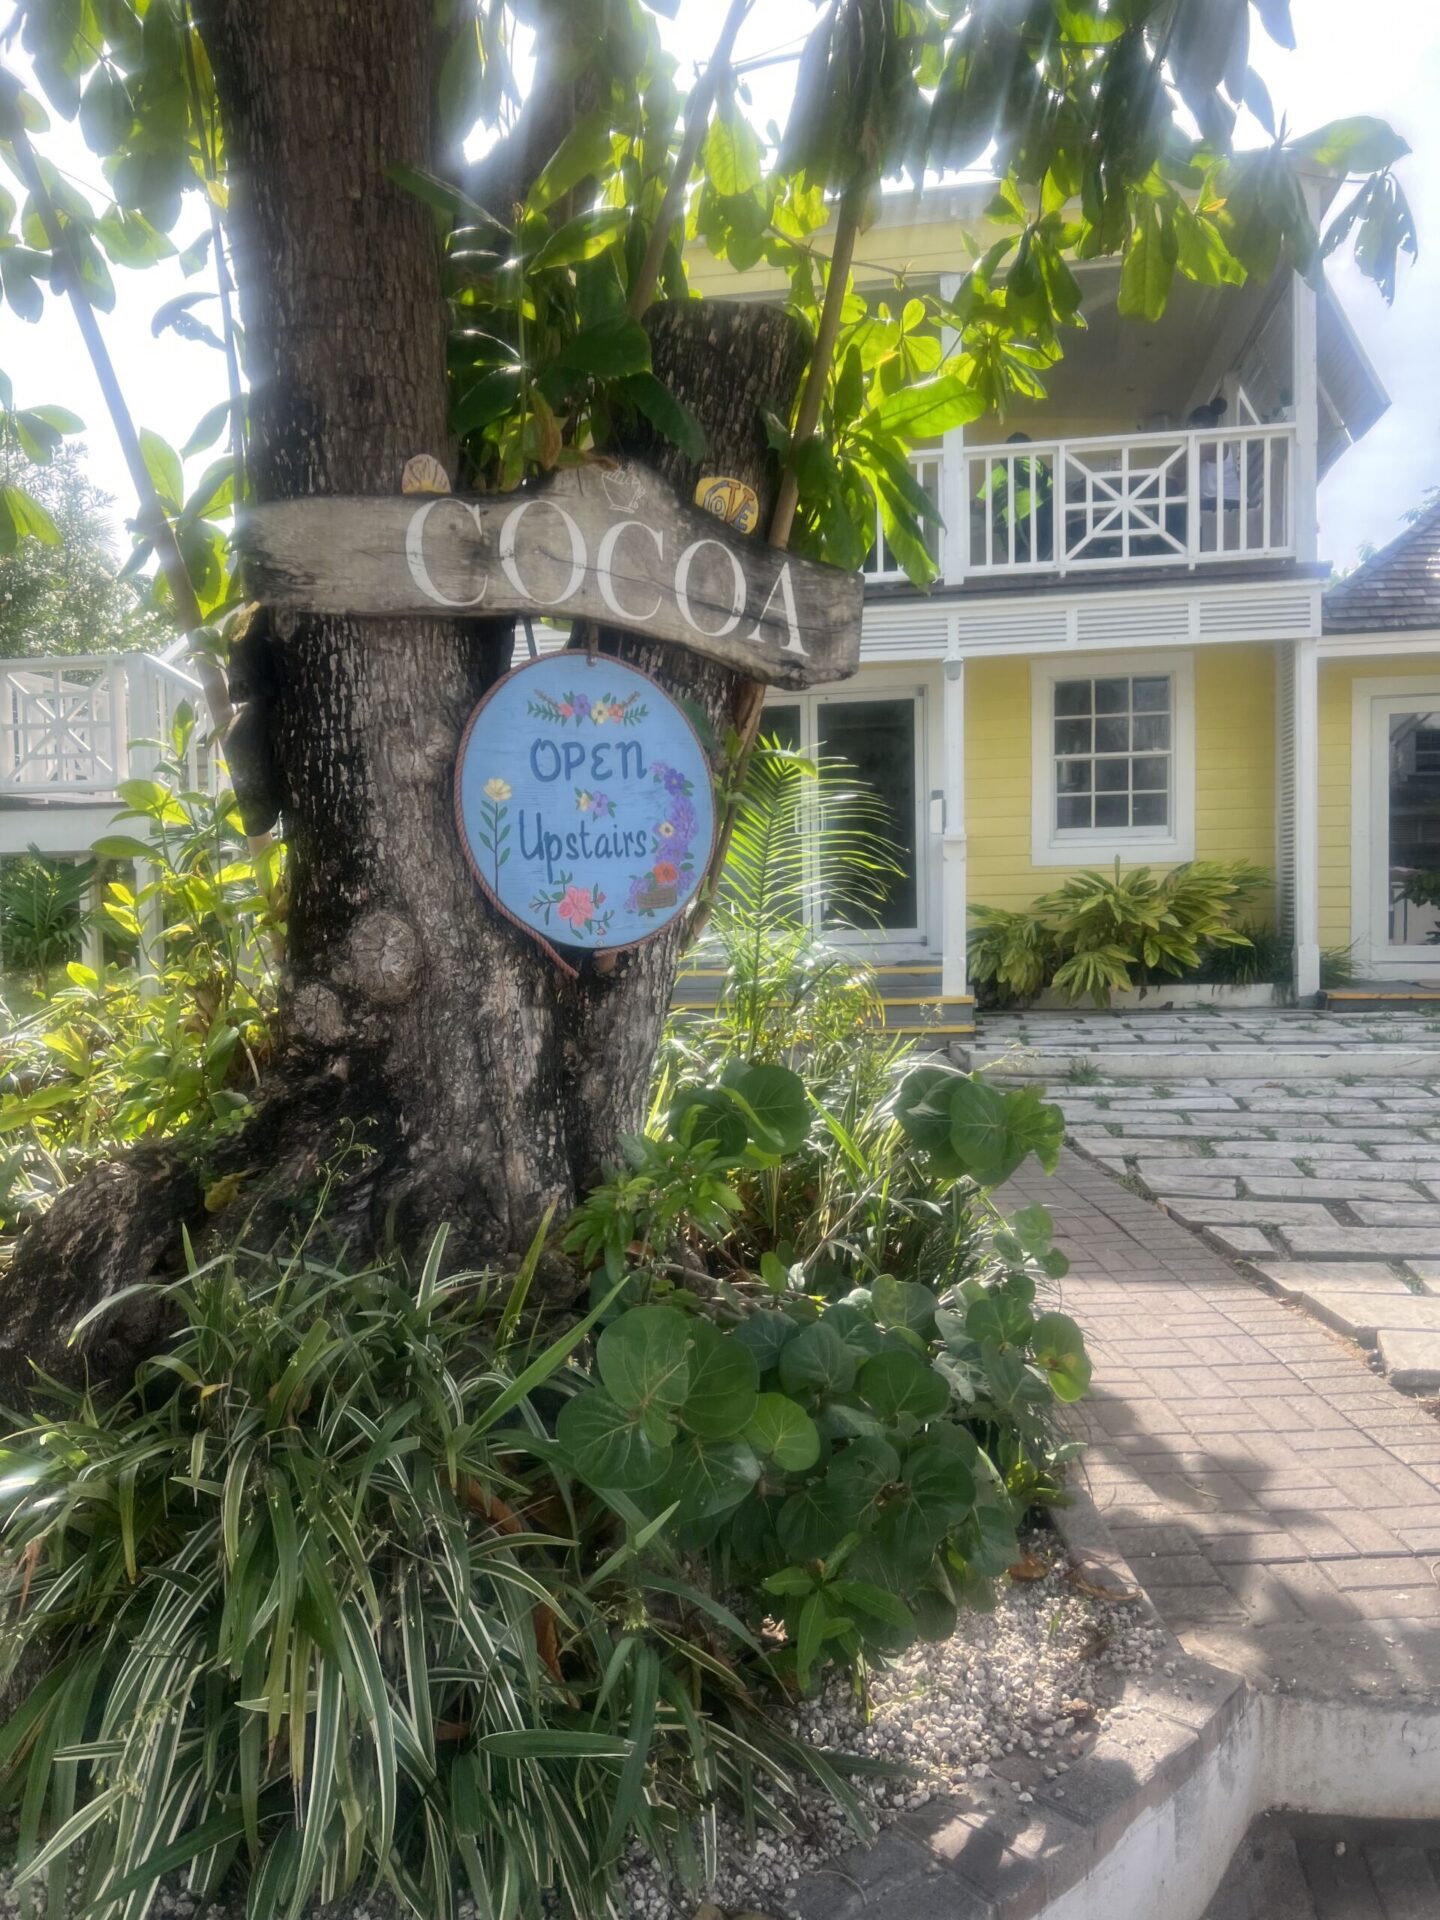 COCOA COFFEE HOUSE